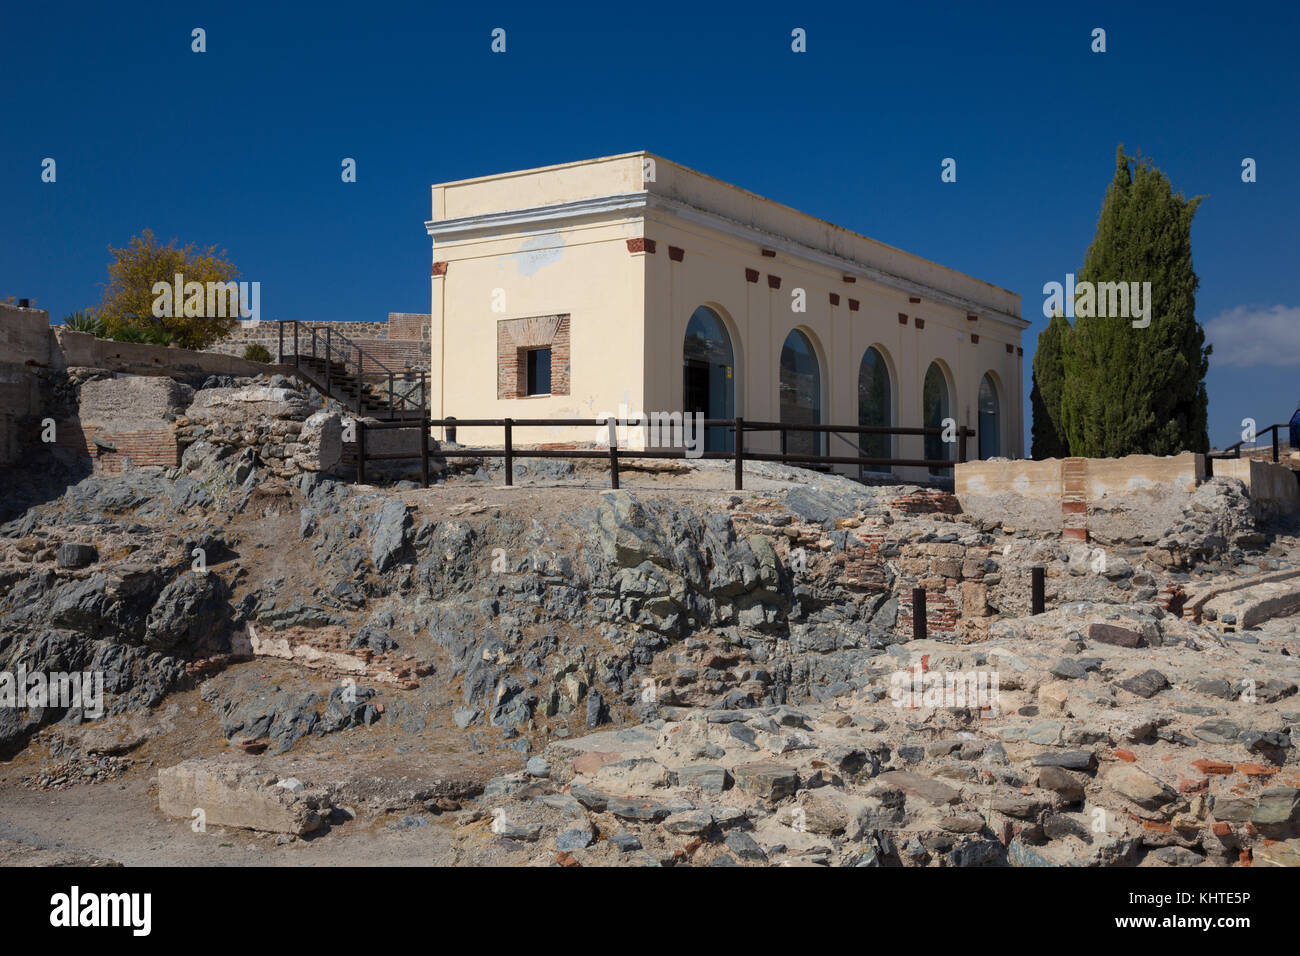 Castillo San Miguel und das Archäologische Museum, Almunecar, Spanien Stockfoto